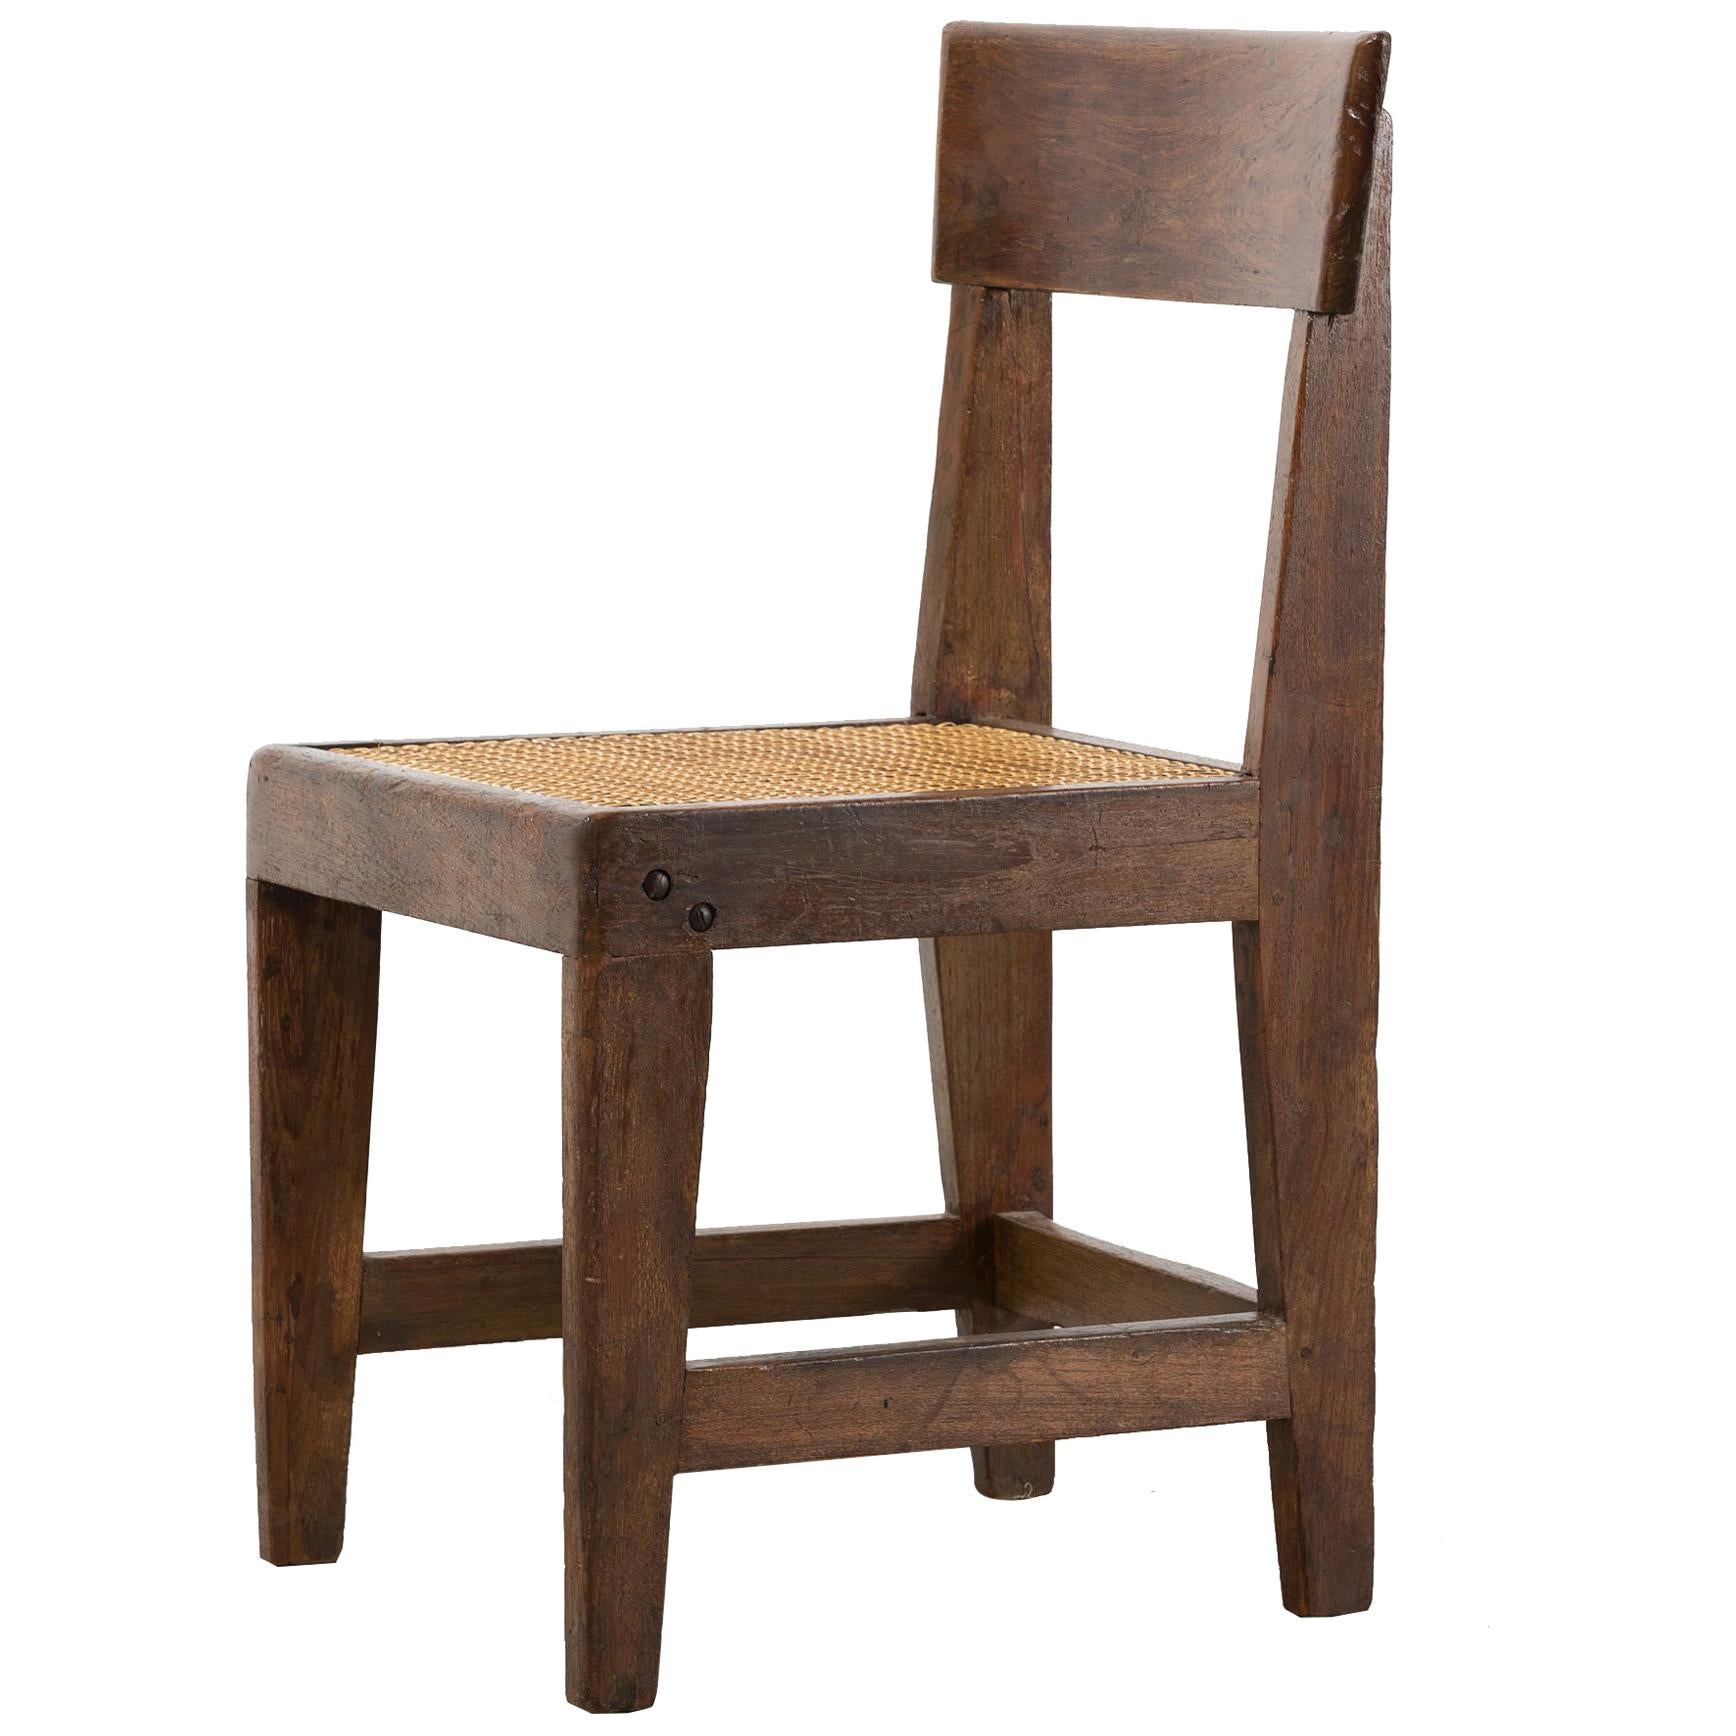 Pierre Jeanneret, Chair, ca. 1955